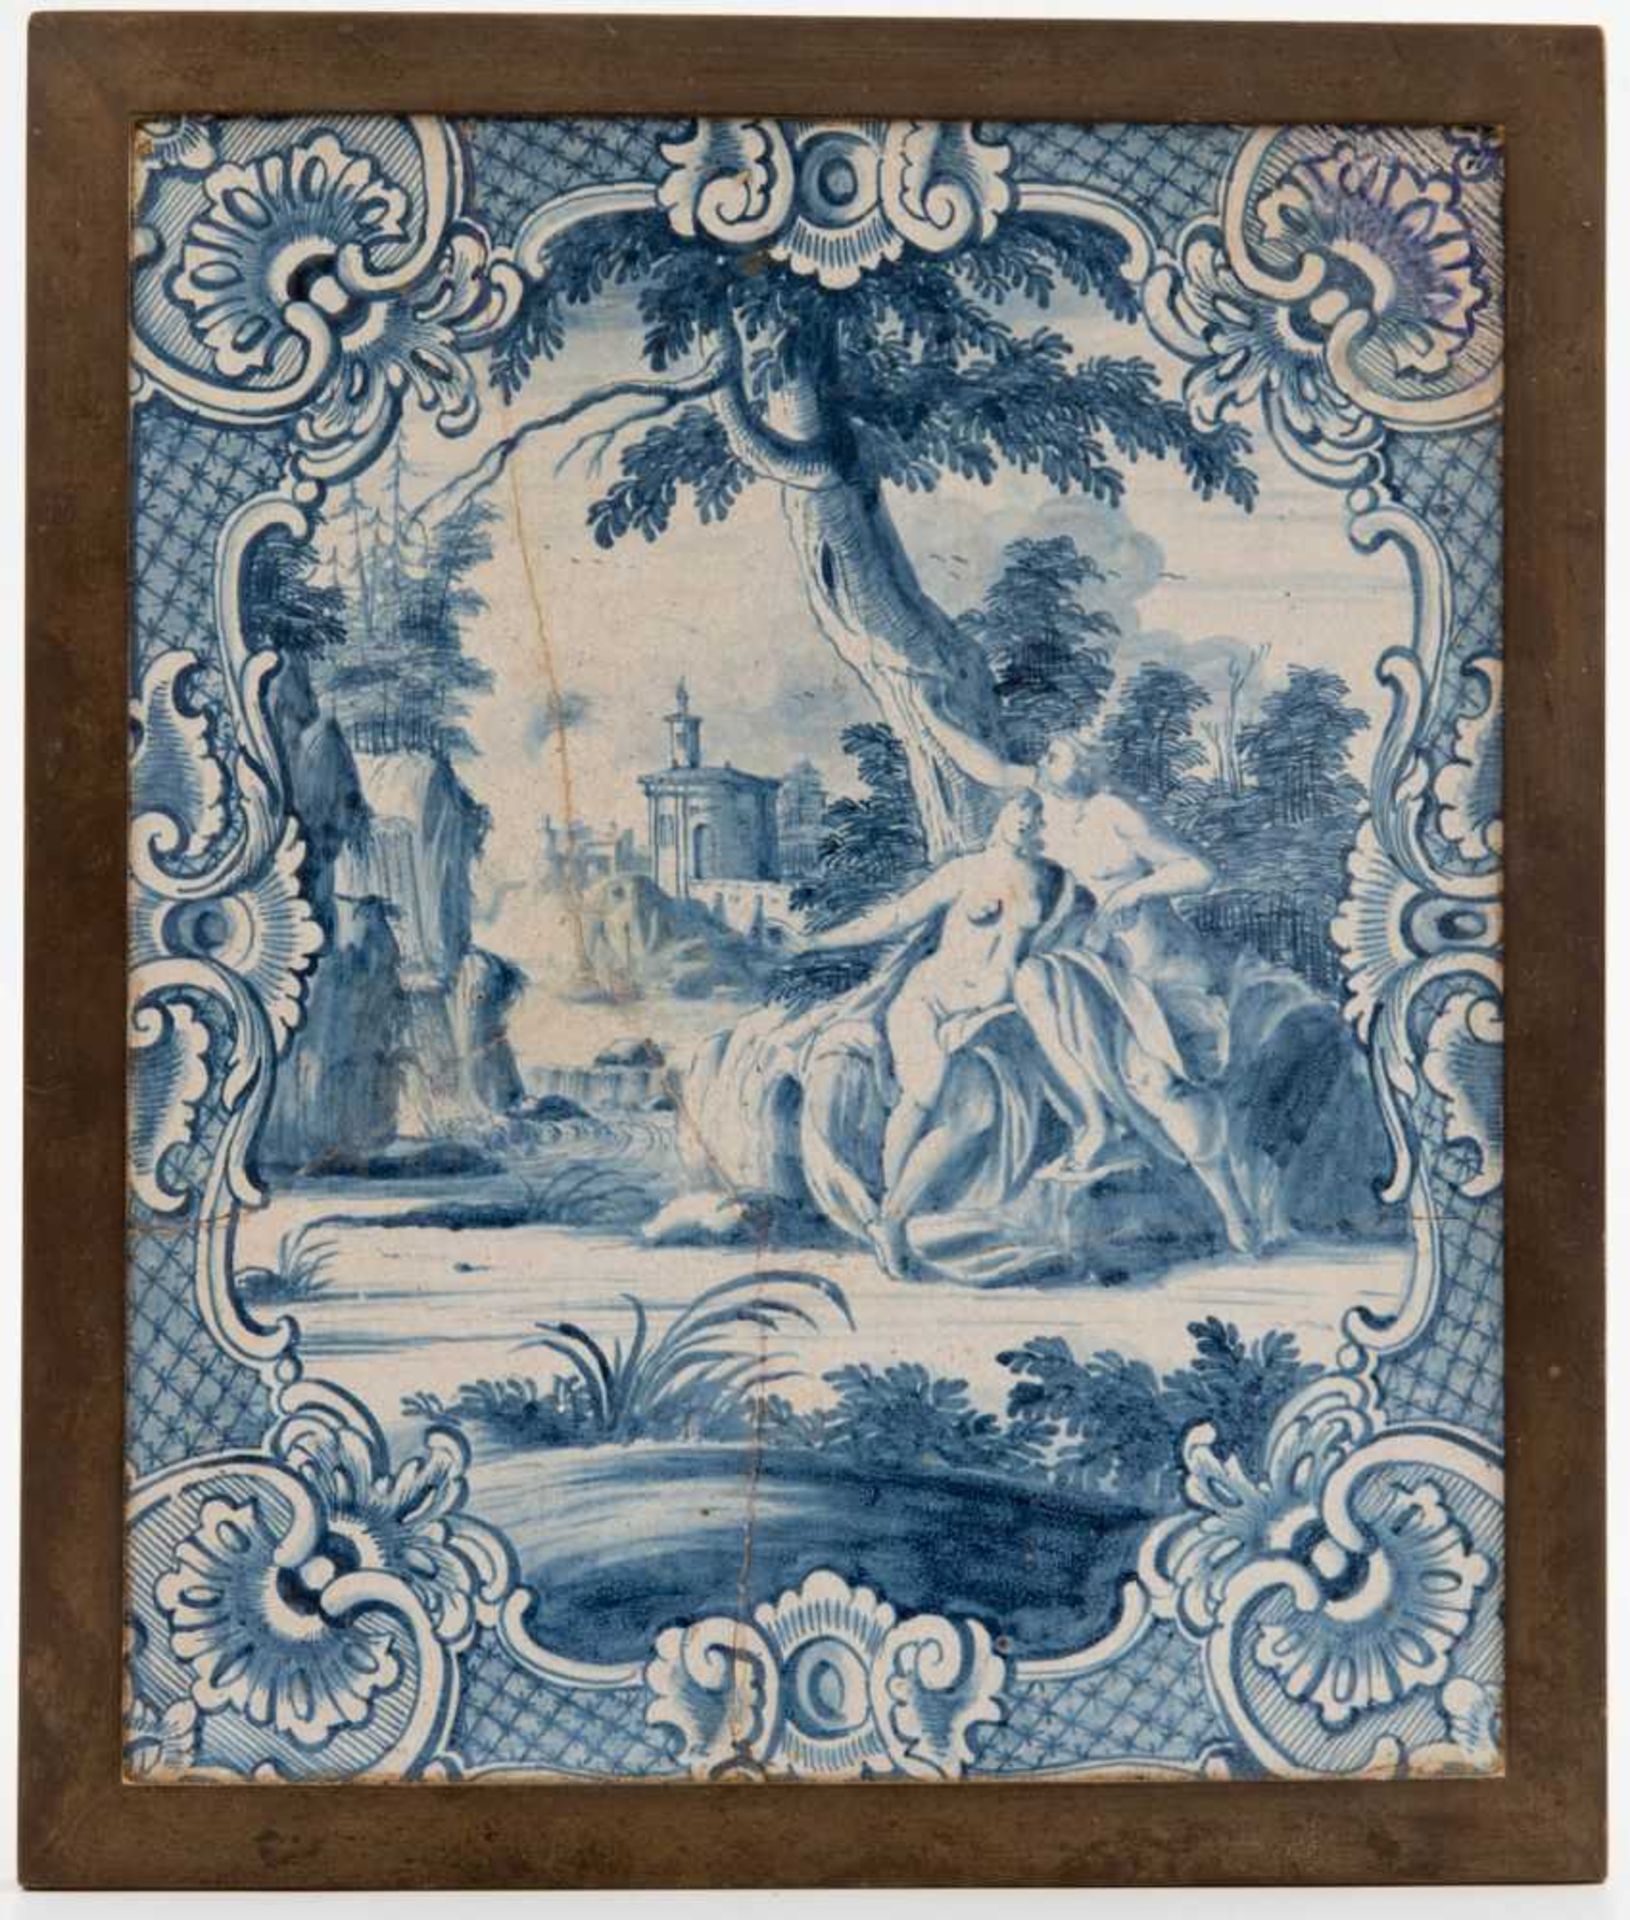 Bildtafel mit mythologischer Szene,Portugal 18. Jh Fayence unter der Glasur blau bemalt. (Azulejo)